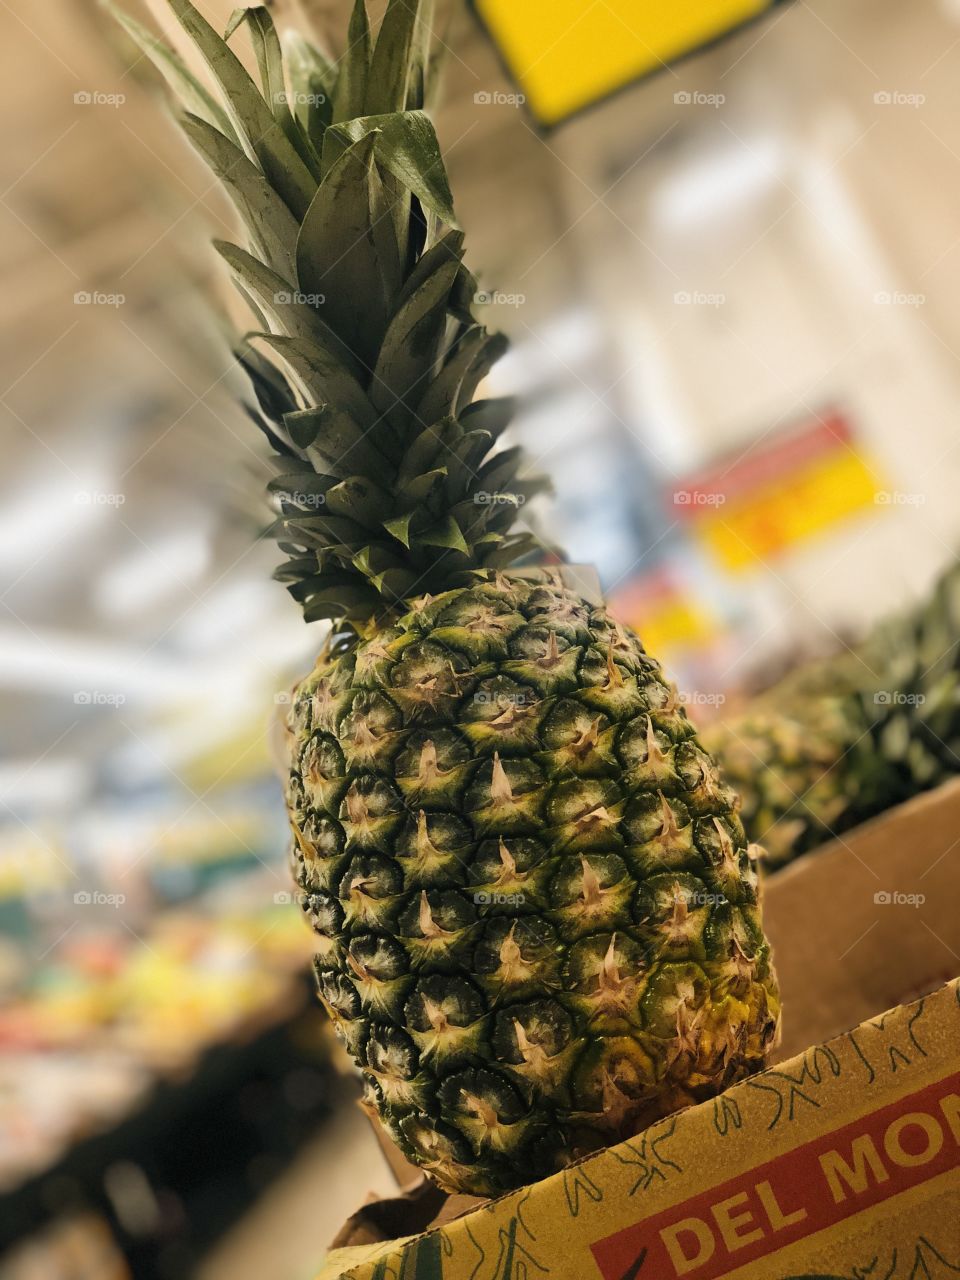 Pineapple dream